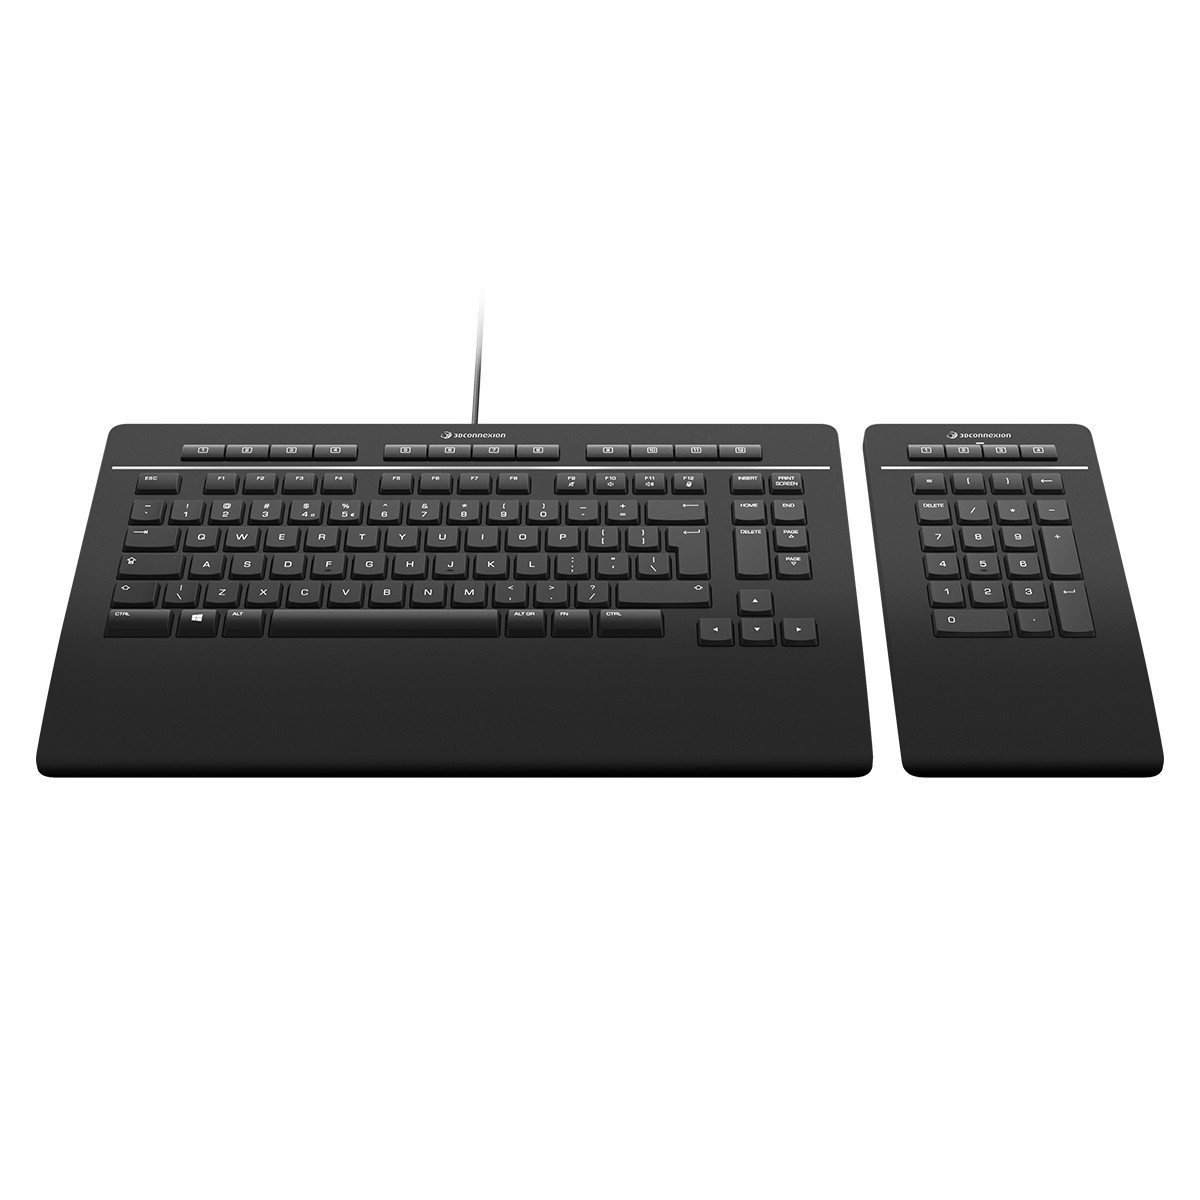 3Dconnexion Keyboard Pro with Numpad US-Internation